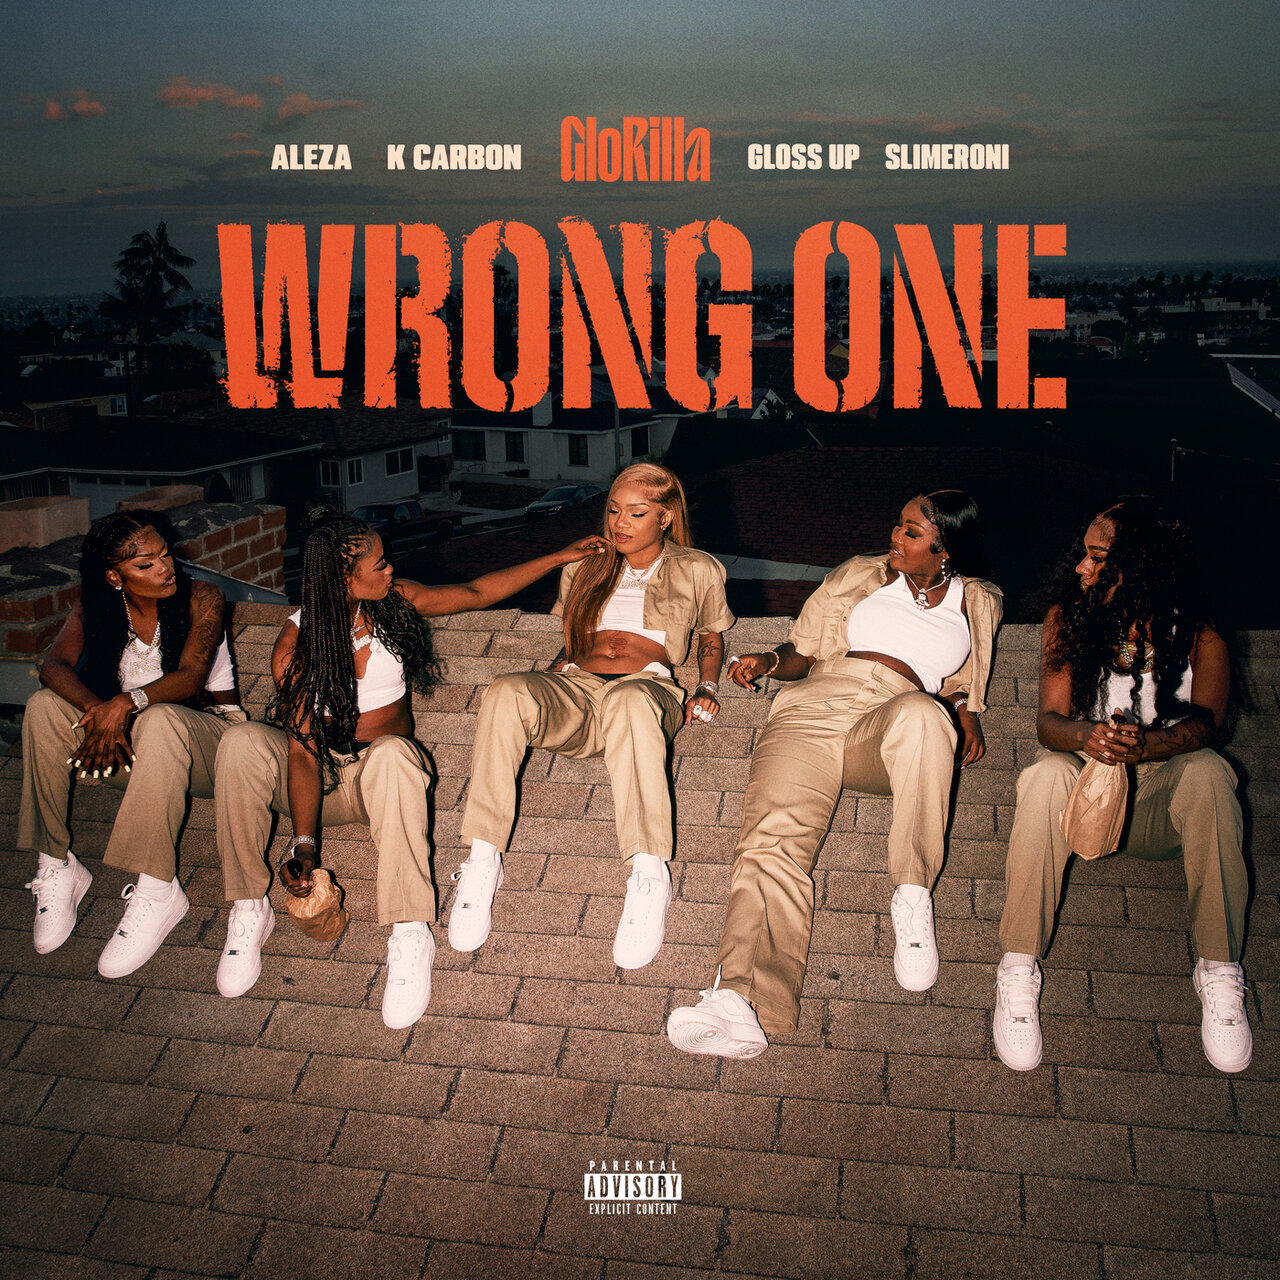 GloRilla - Wrong One (ft. Gloss Up, Slimeroni, K Carbon, Aleza and Tay Keith) (Cover)